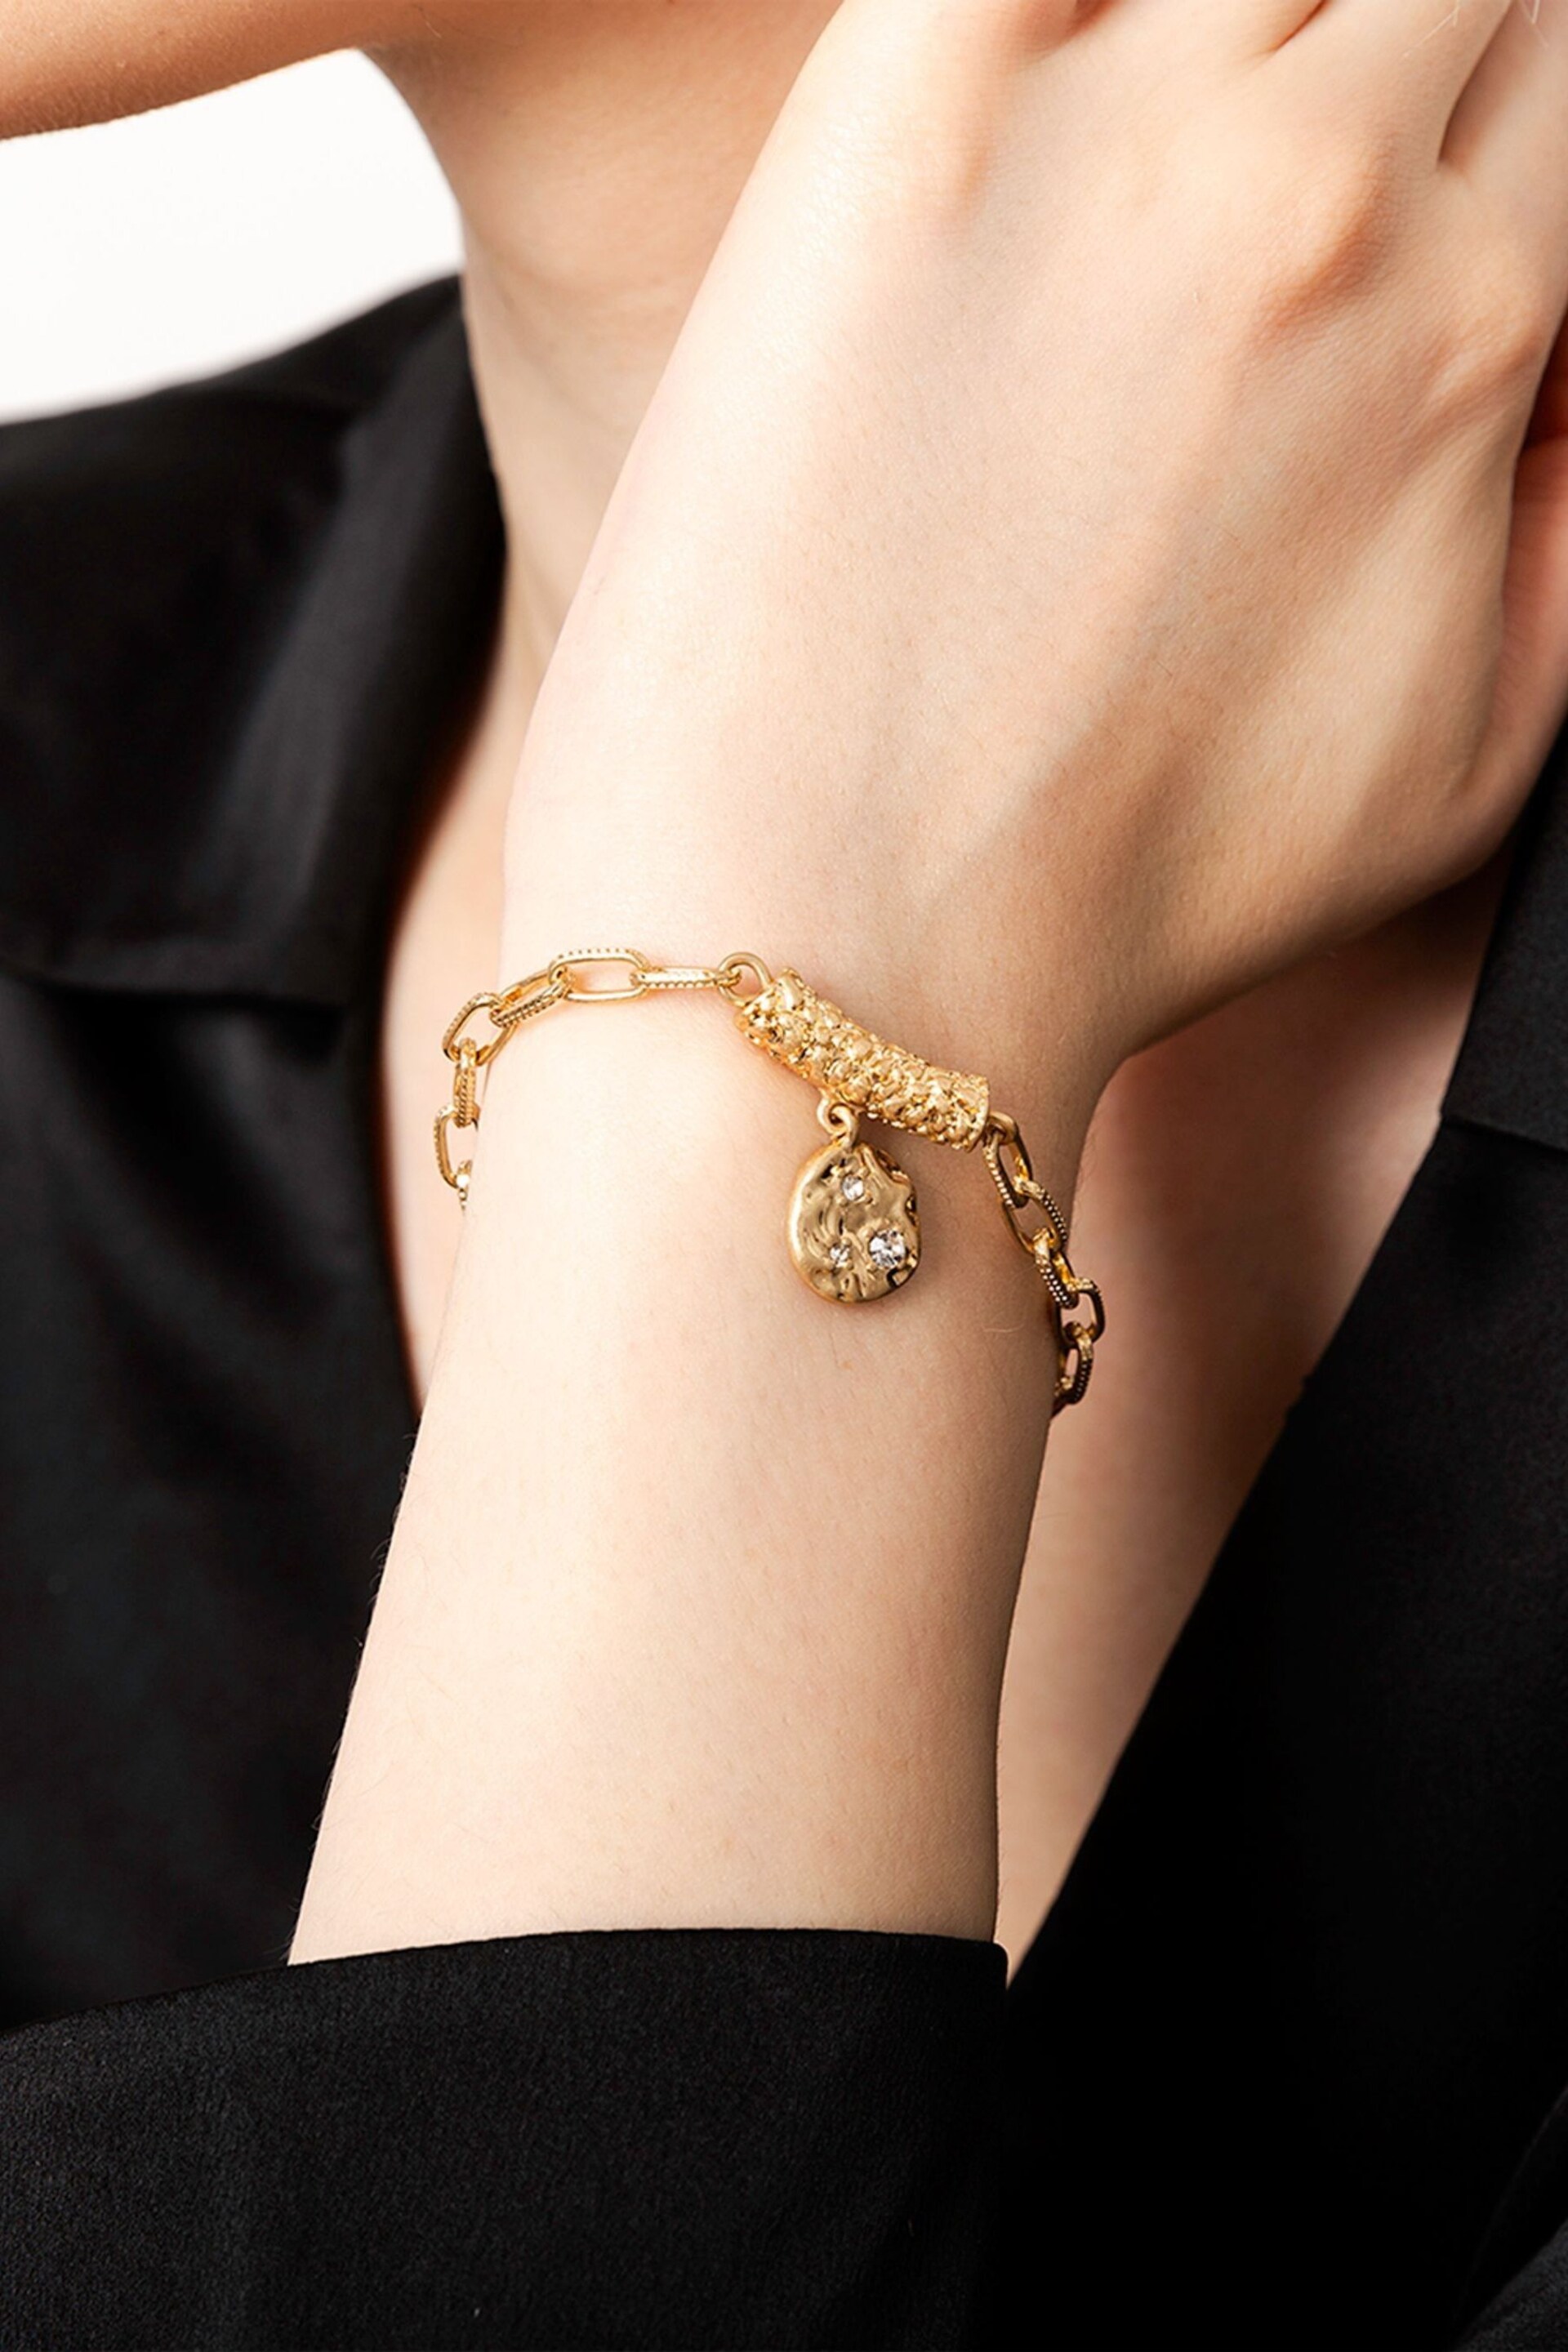 Bibi Bijoux Gold Tone 'Radiance' Bracelet and Earrings Set - Image 4 of 4